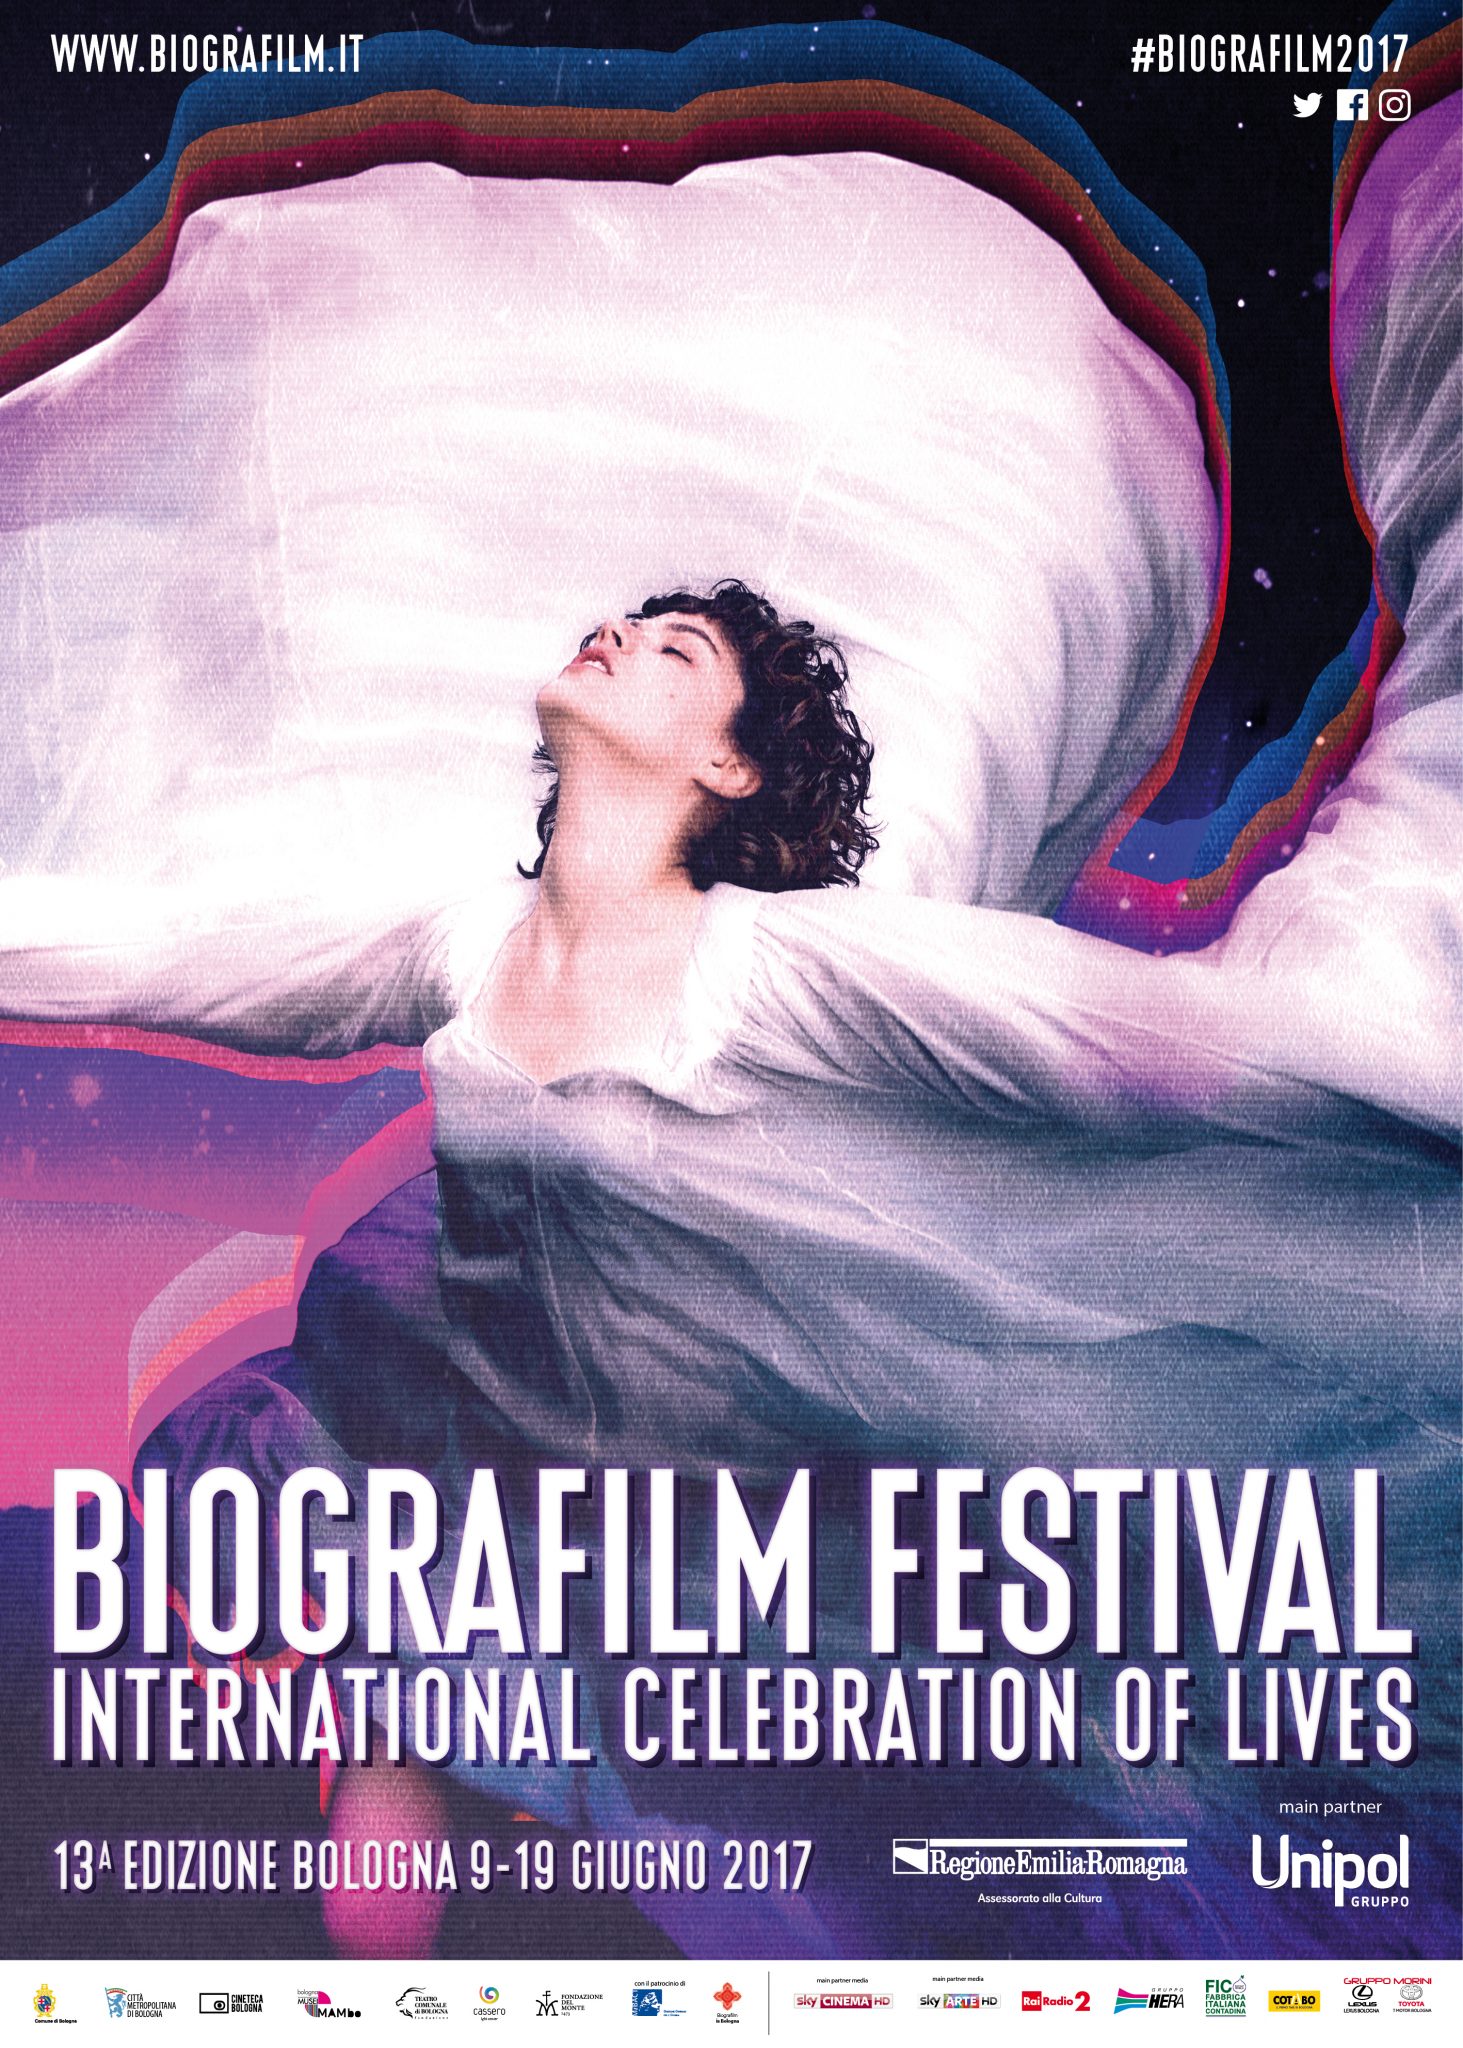 biografilm festival 2017